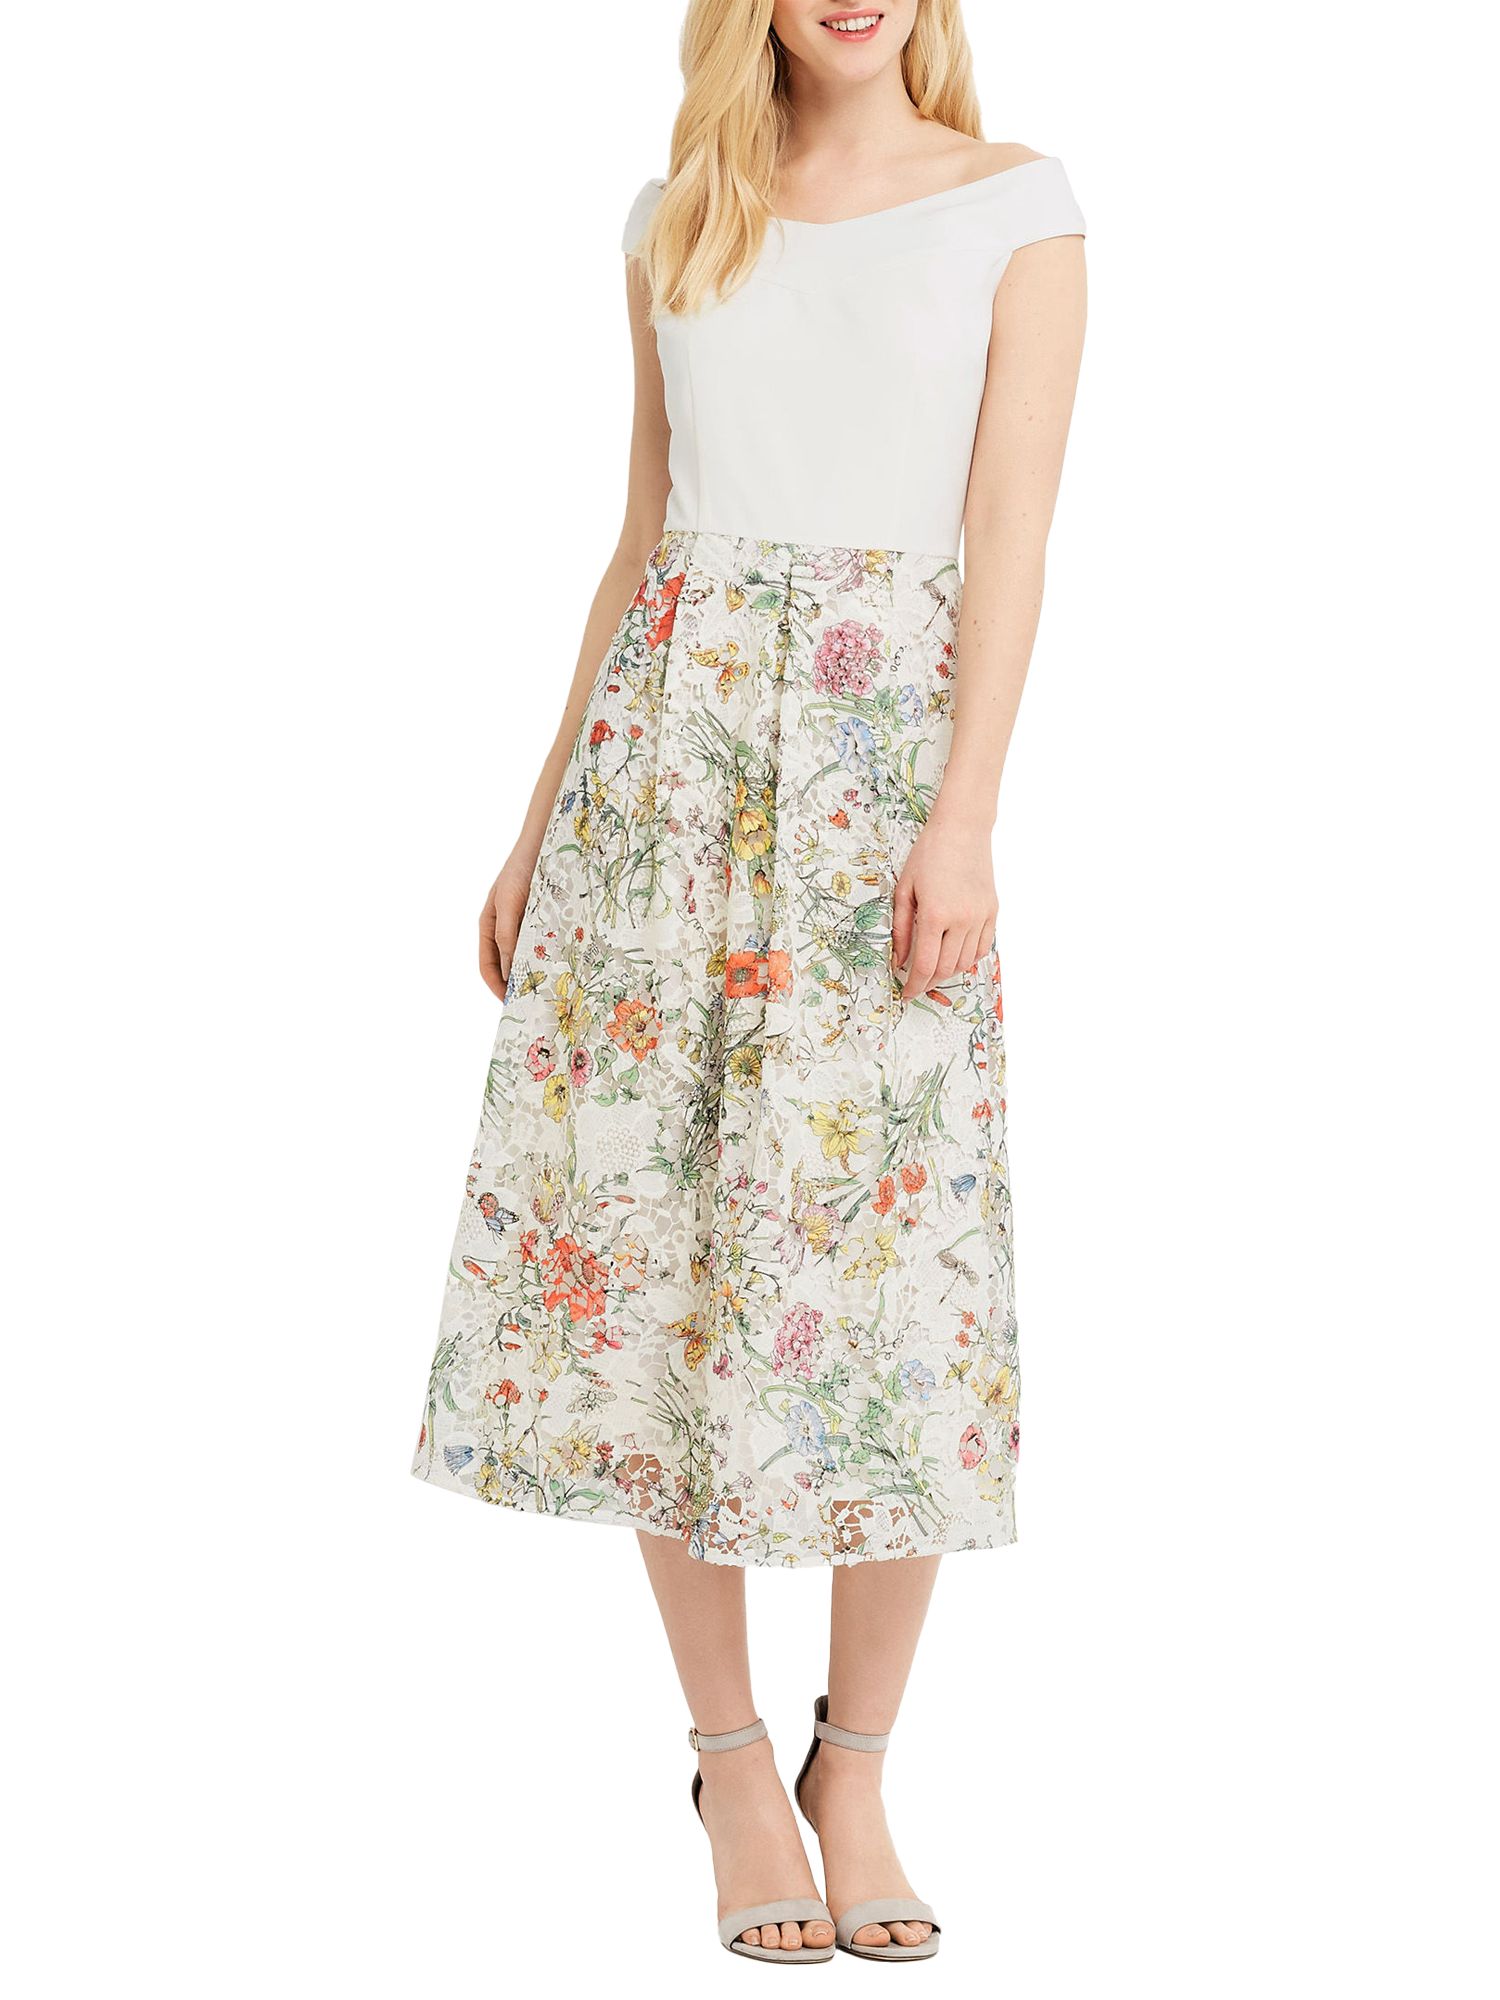 Oasis Spring Print Lace Bardot Dress, Multi/Natural, 16